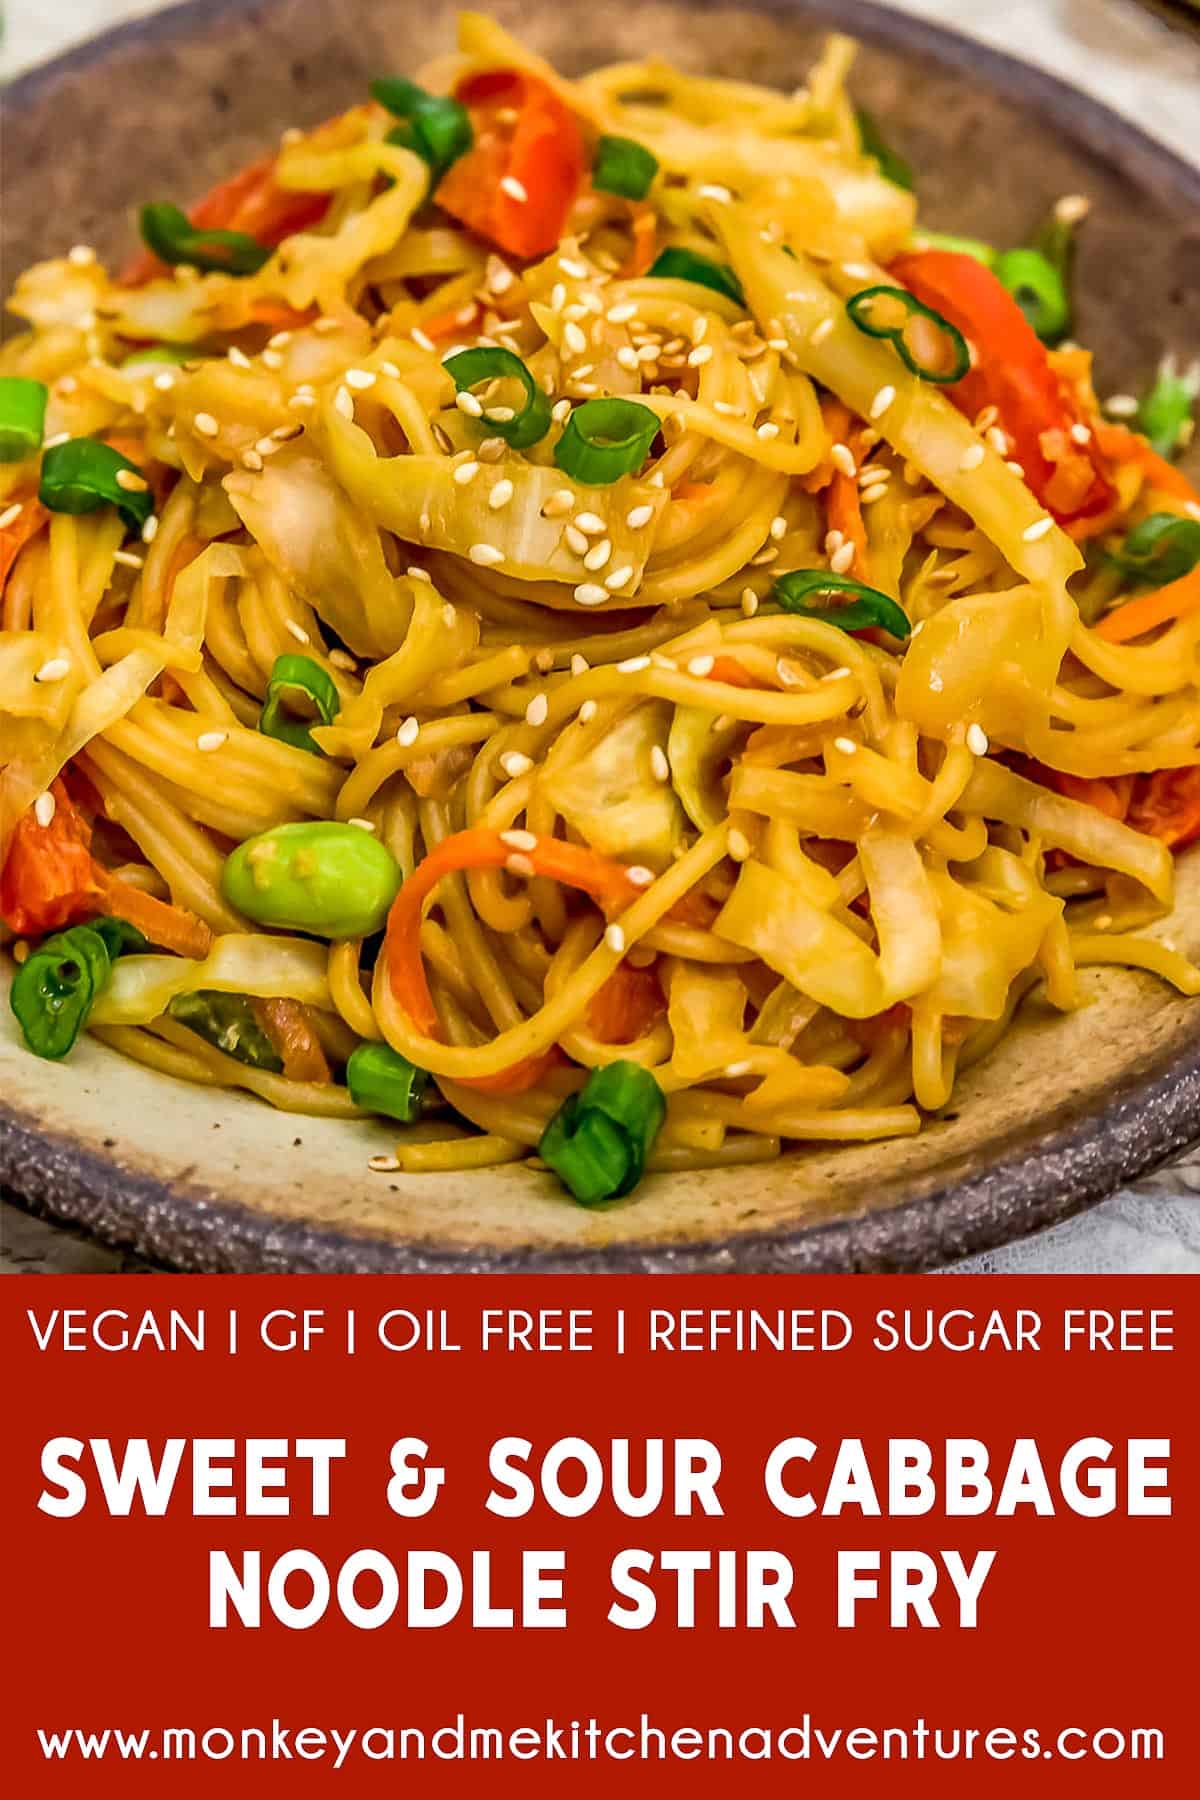 Sweet and Sour Cabbage Noodle Stir Fry with text description